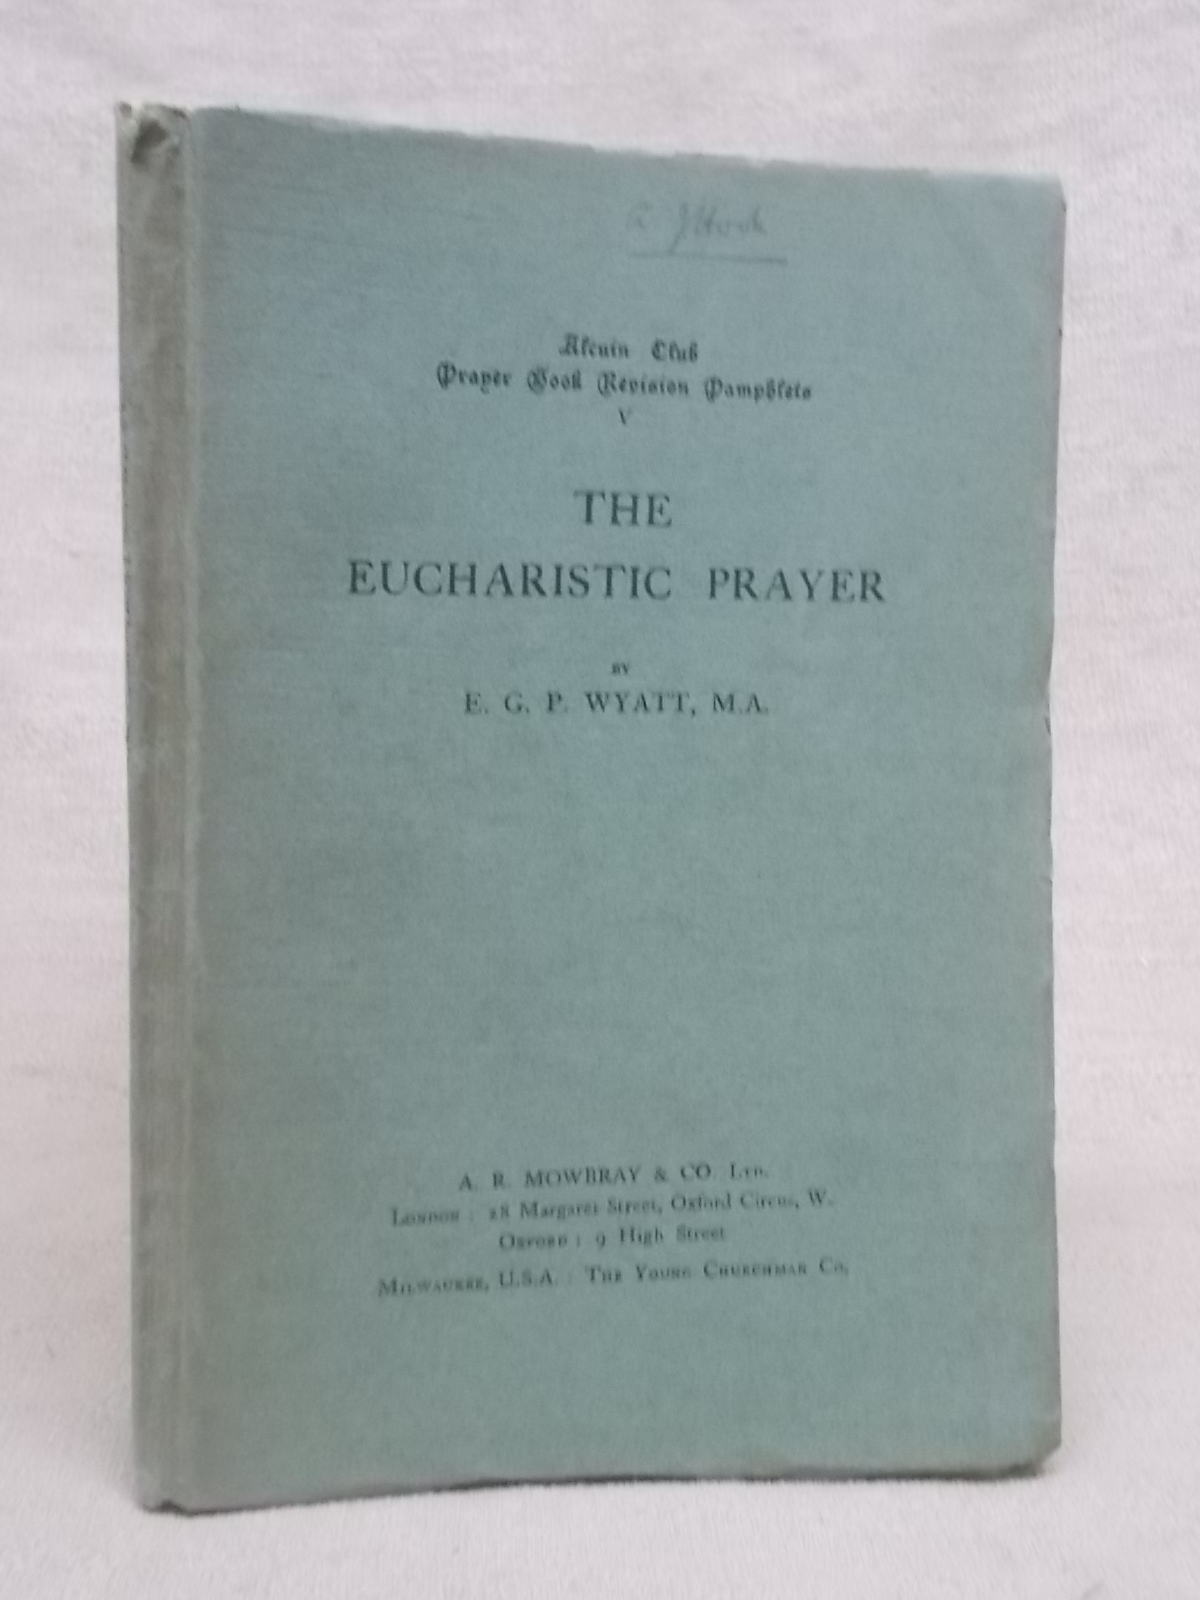 THE EUCHARISTIC PRAYER - ALCUIN CLUB PRAYER BOOK REVISION PAMPHLETS NO ...